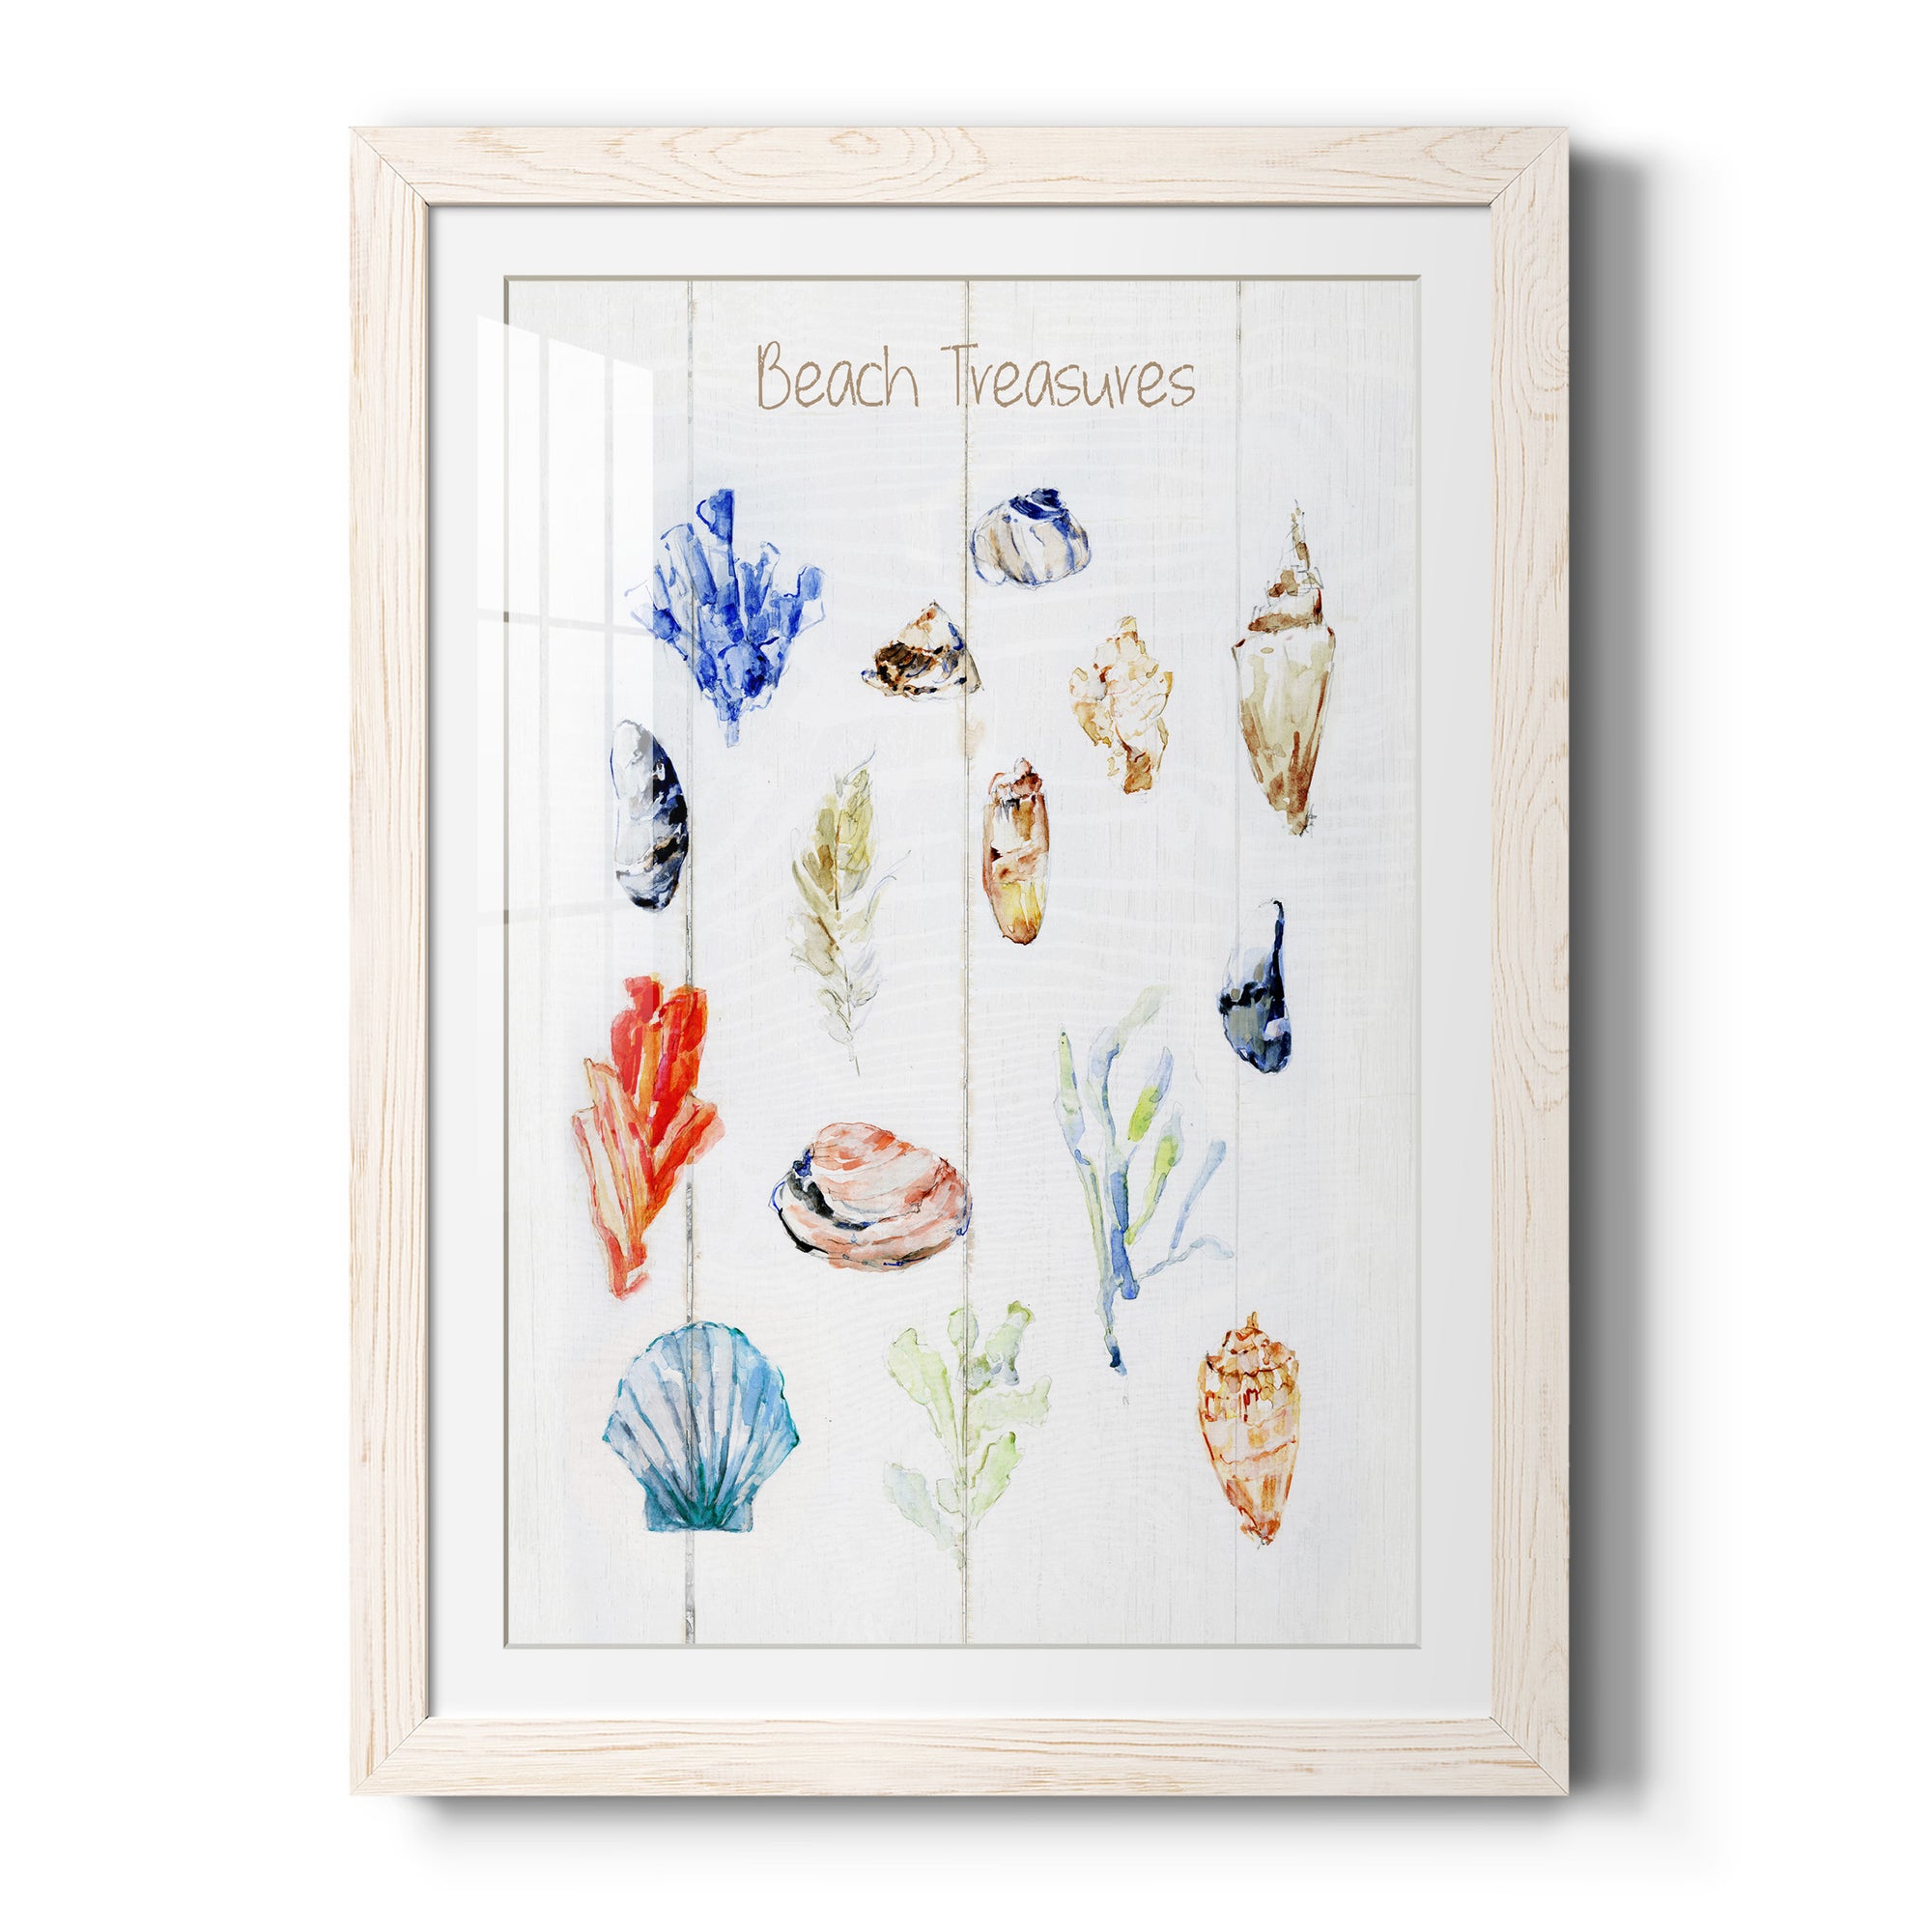 Beach Treasures - Premium Framed Print - Distressed Barnwood Frame - Ready to Hang